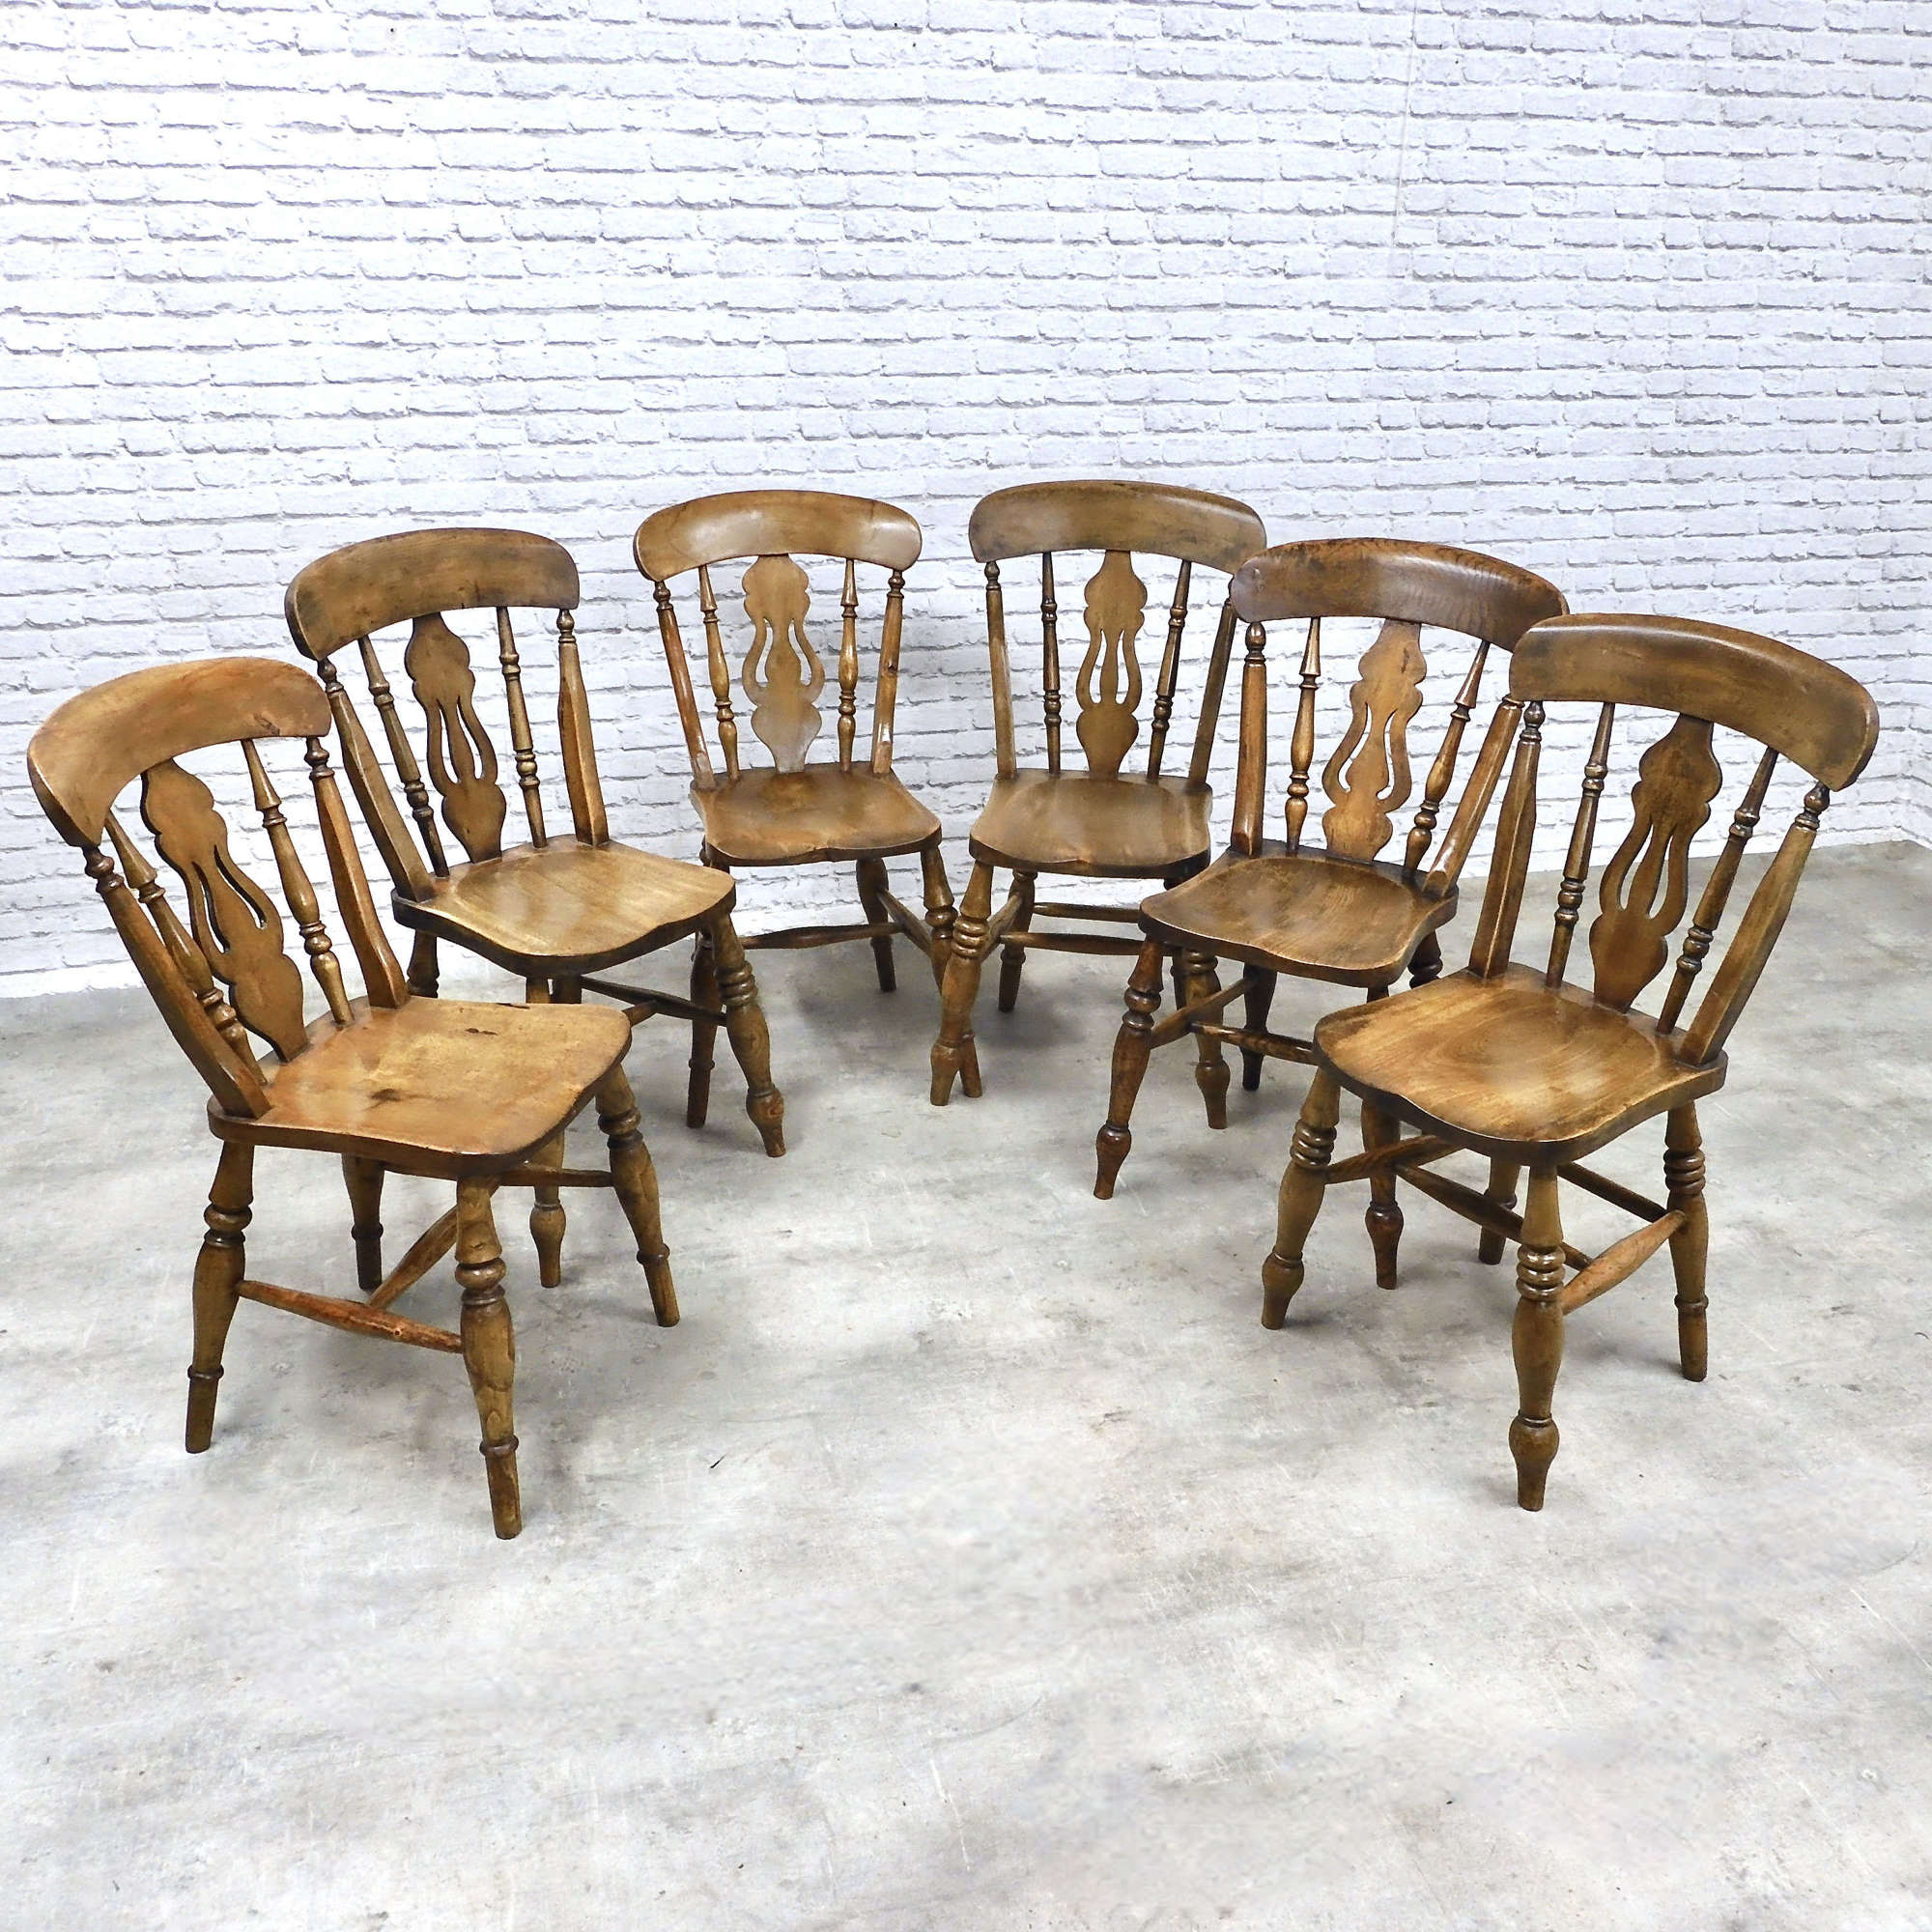 Set of 6 Antique Kitchen Chairs